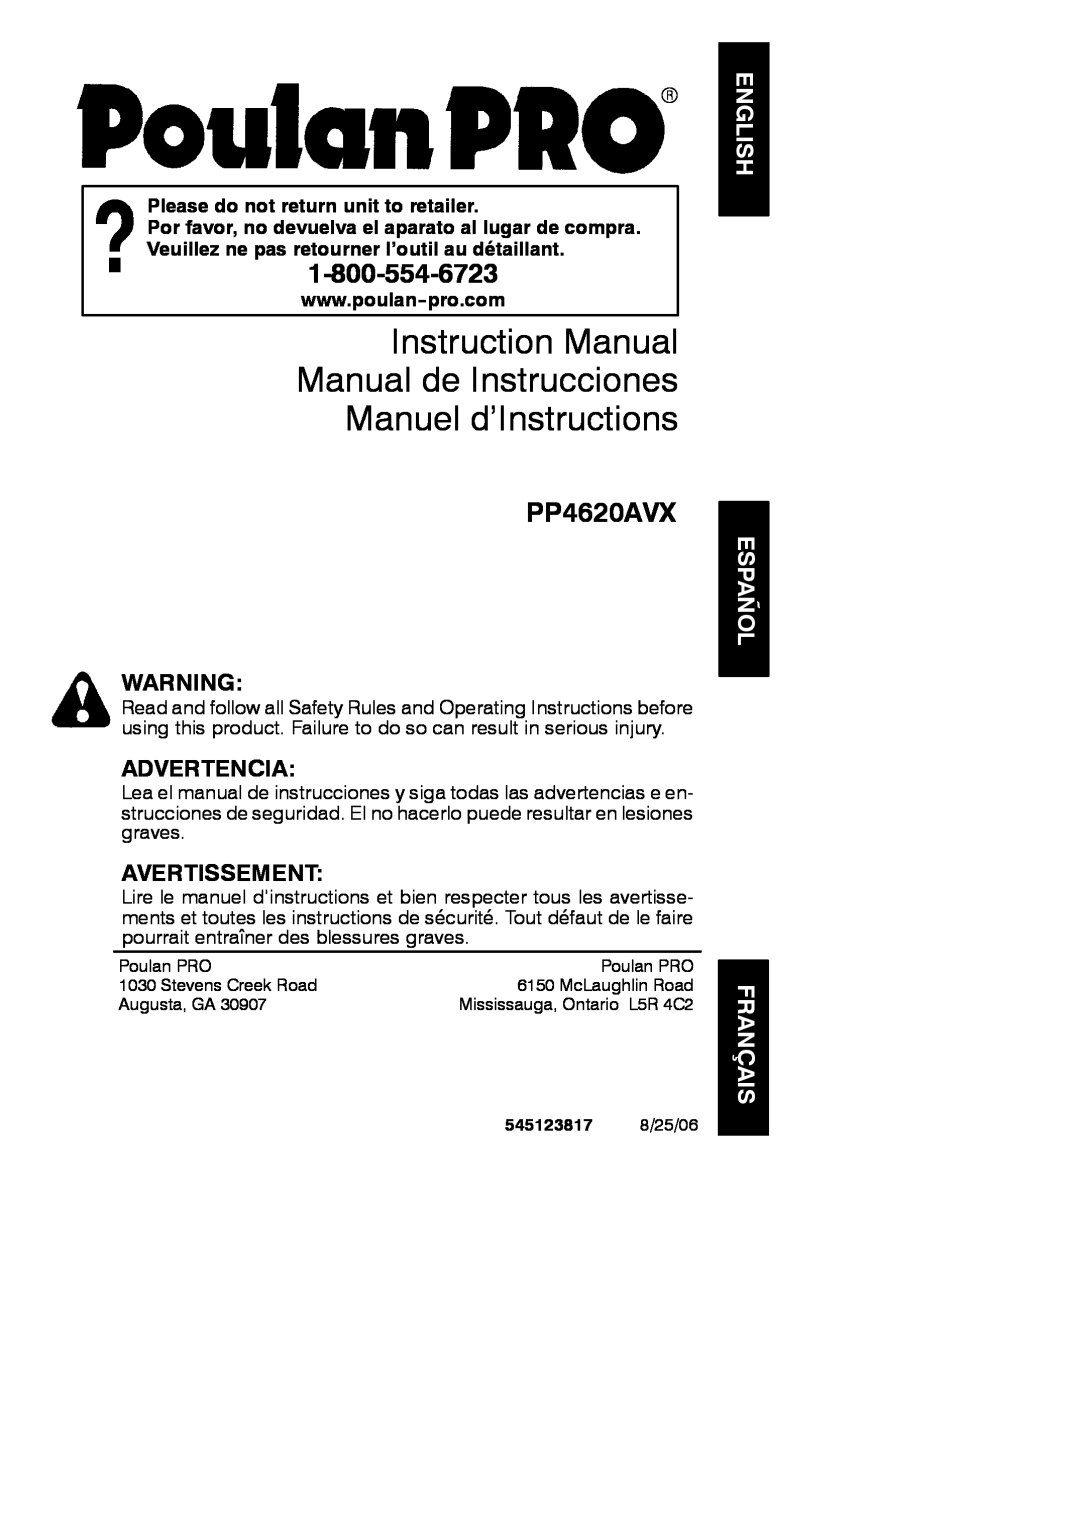 Poulan 545123817 instruction manual English Español Français, PP4620AVX, Advertencia, Avertissement 